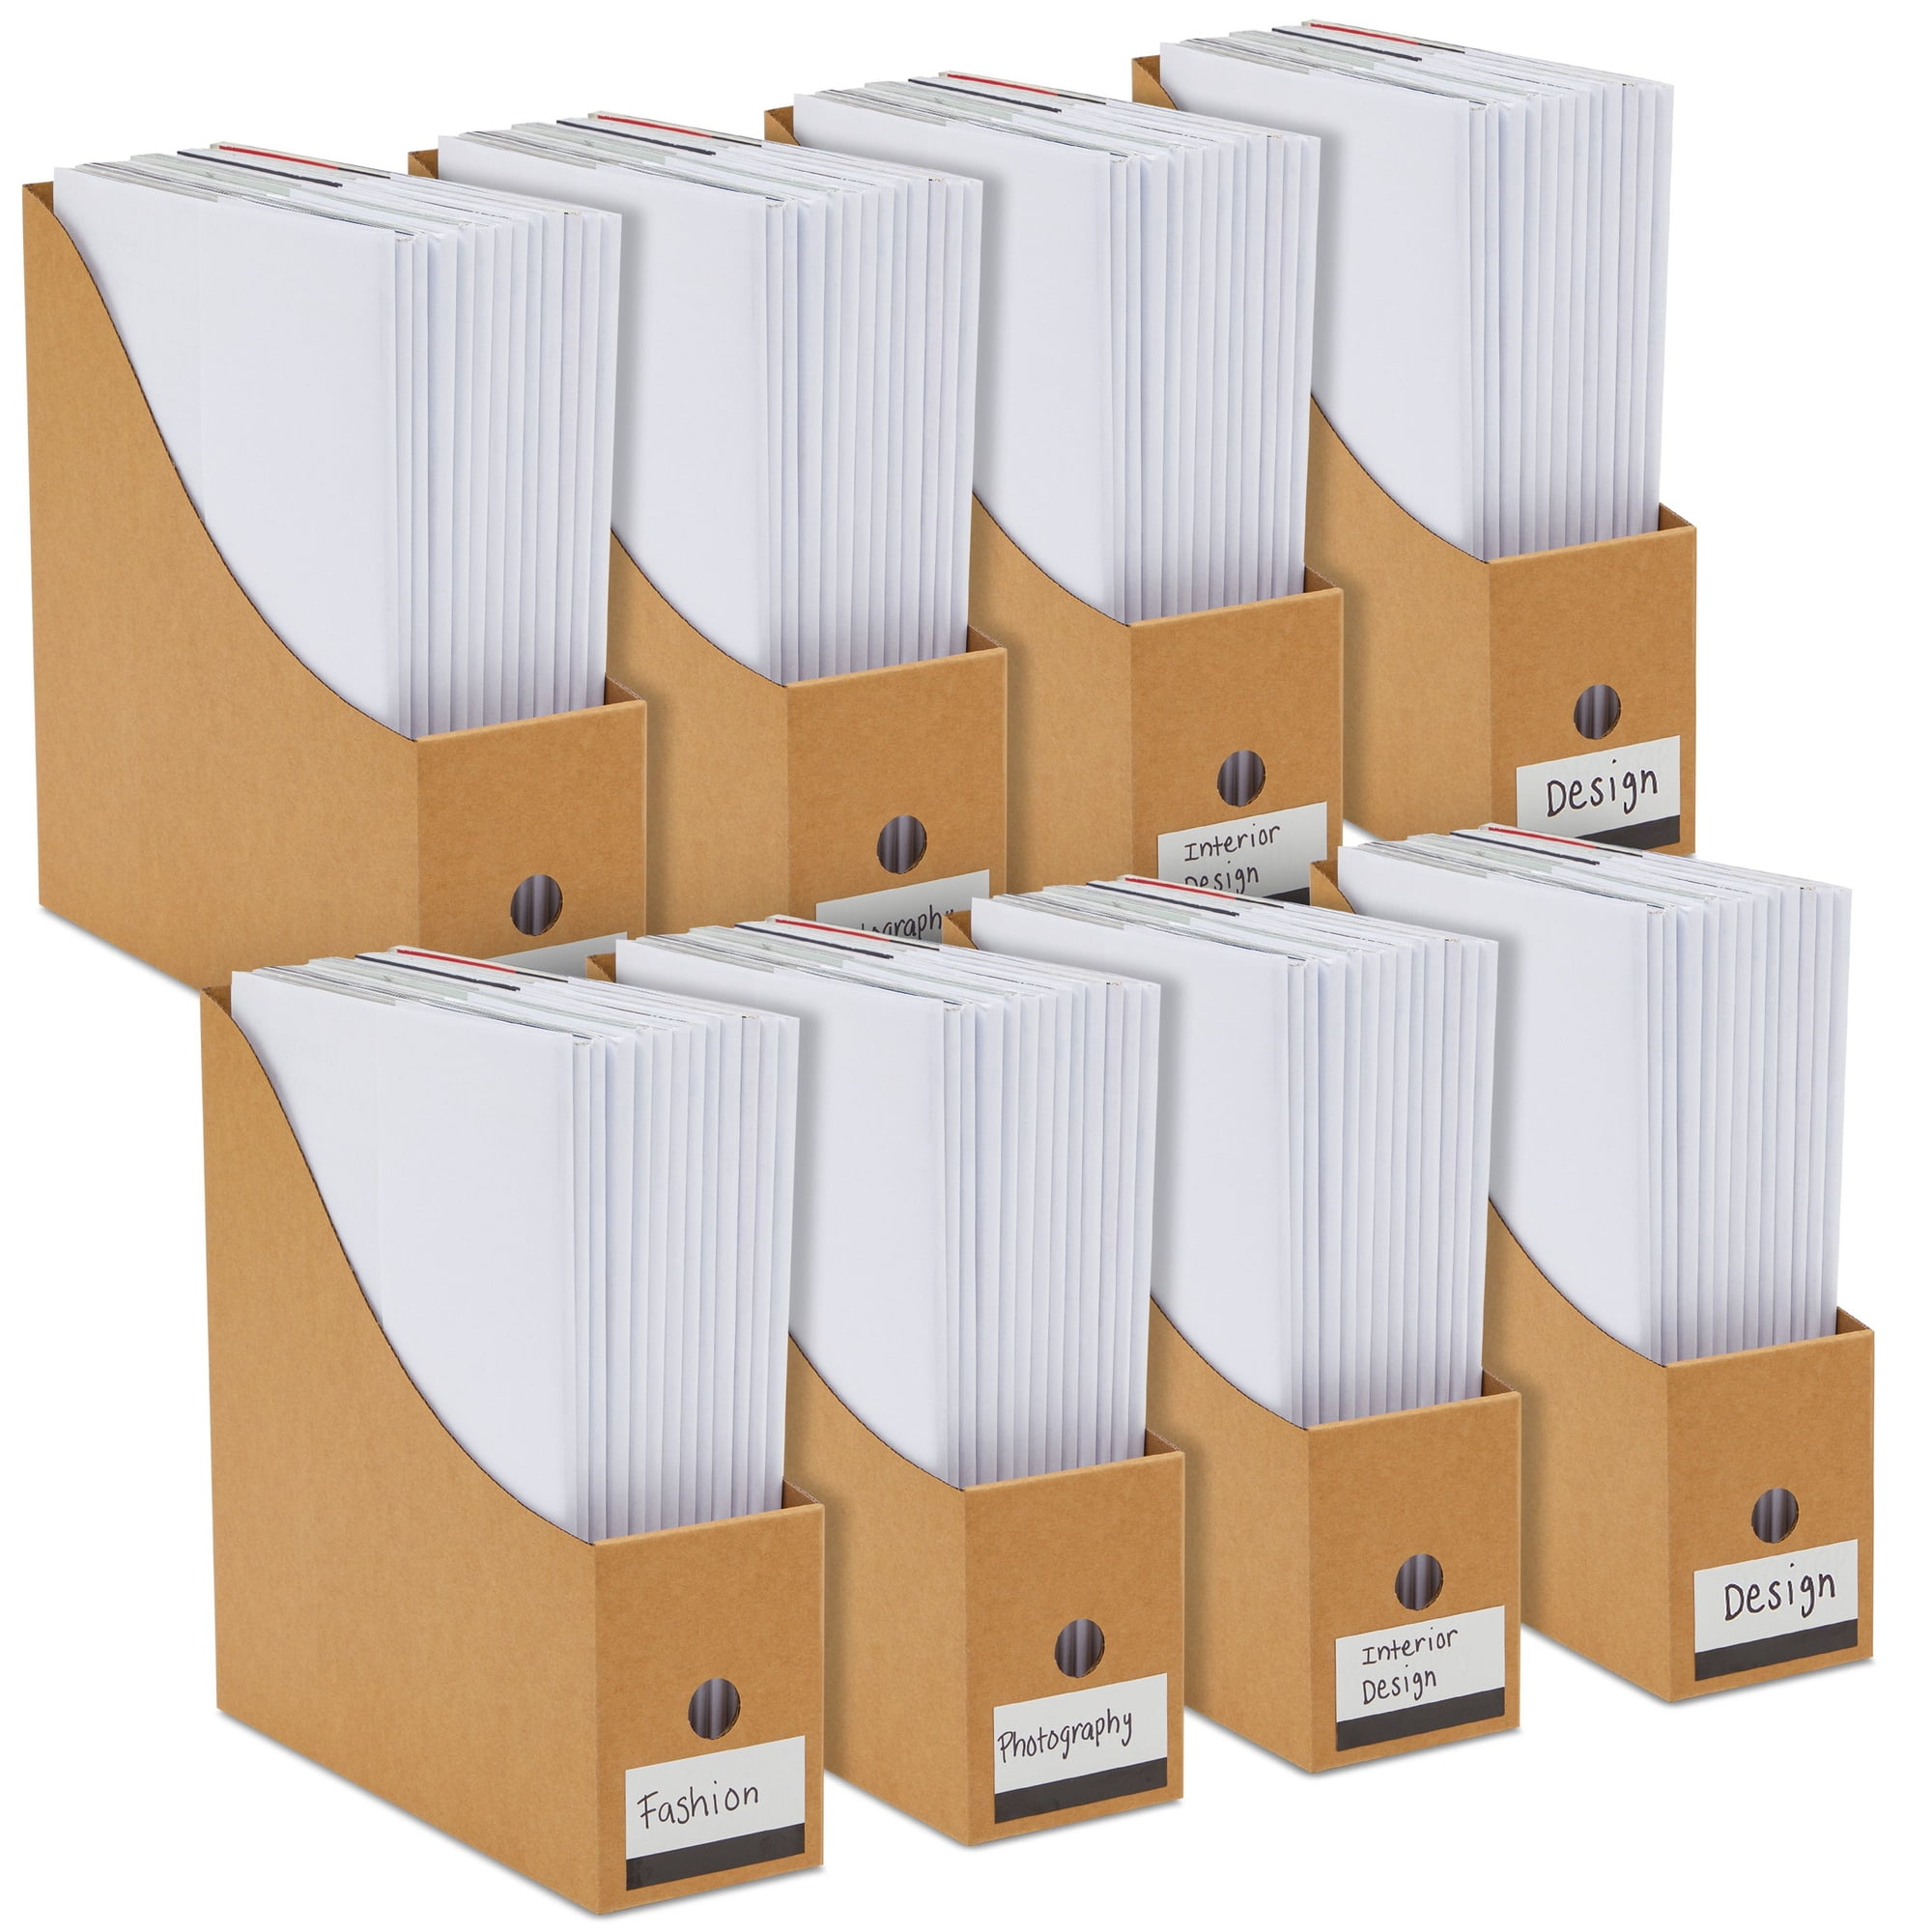 Cardboard File Box Corrugated Stationery Storage Box Office Desk Organizer  